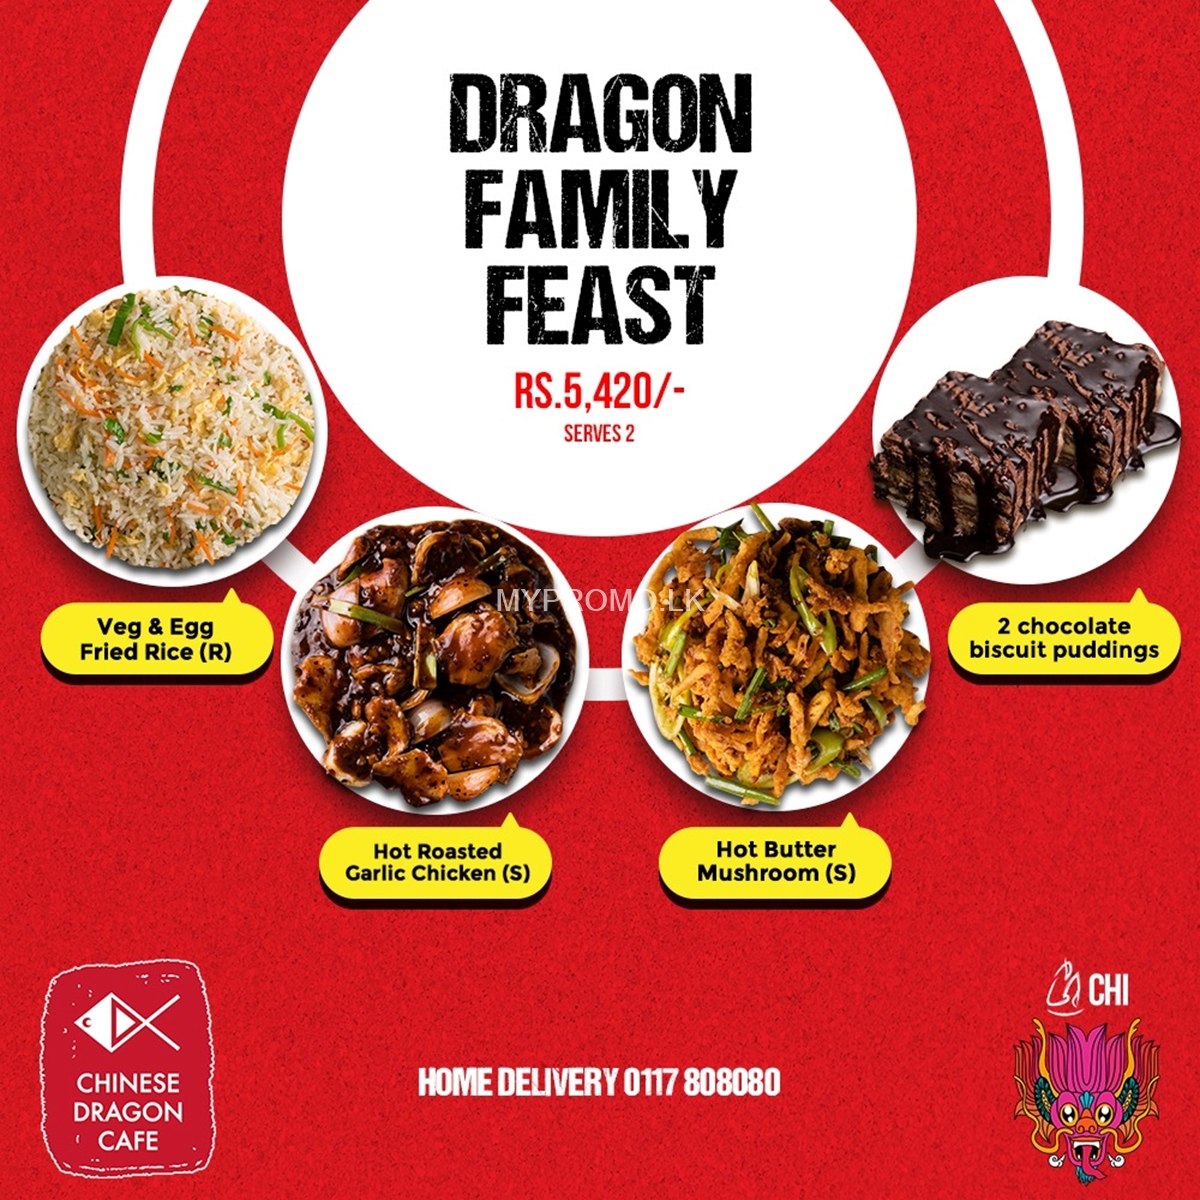  Enjoy the Dragon Family Feast!